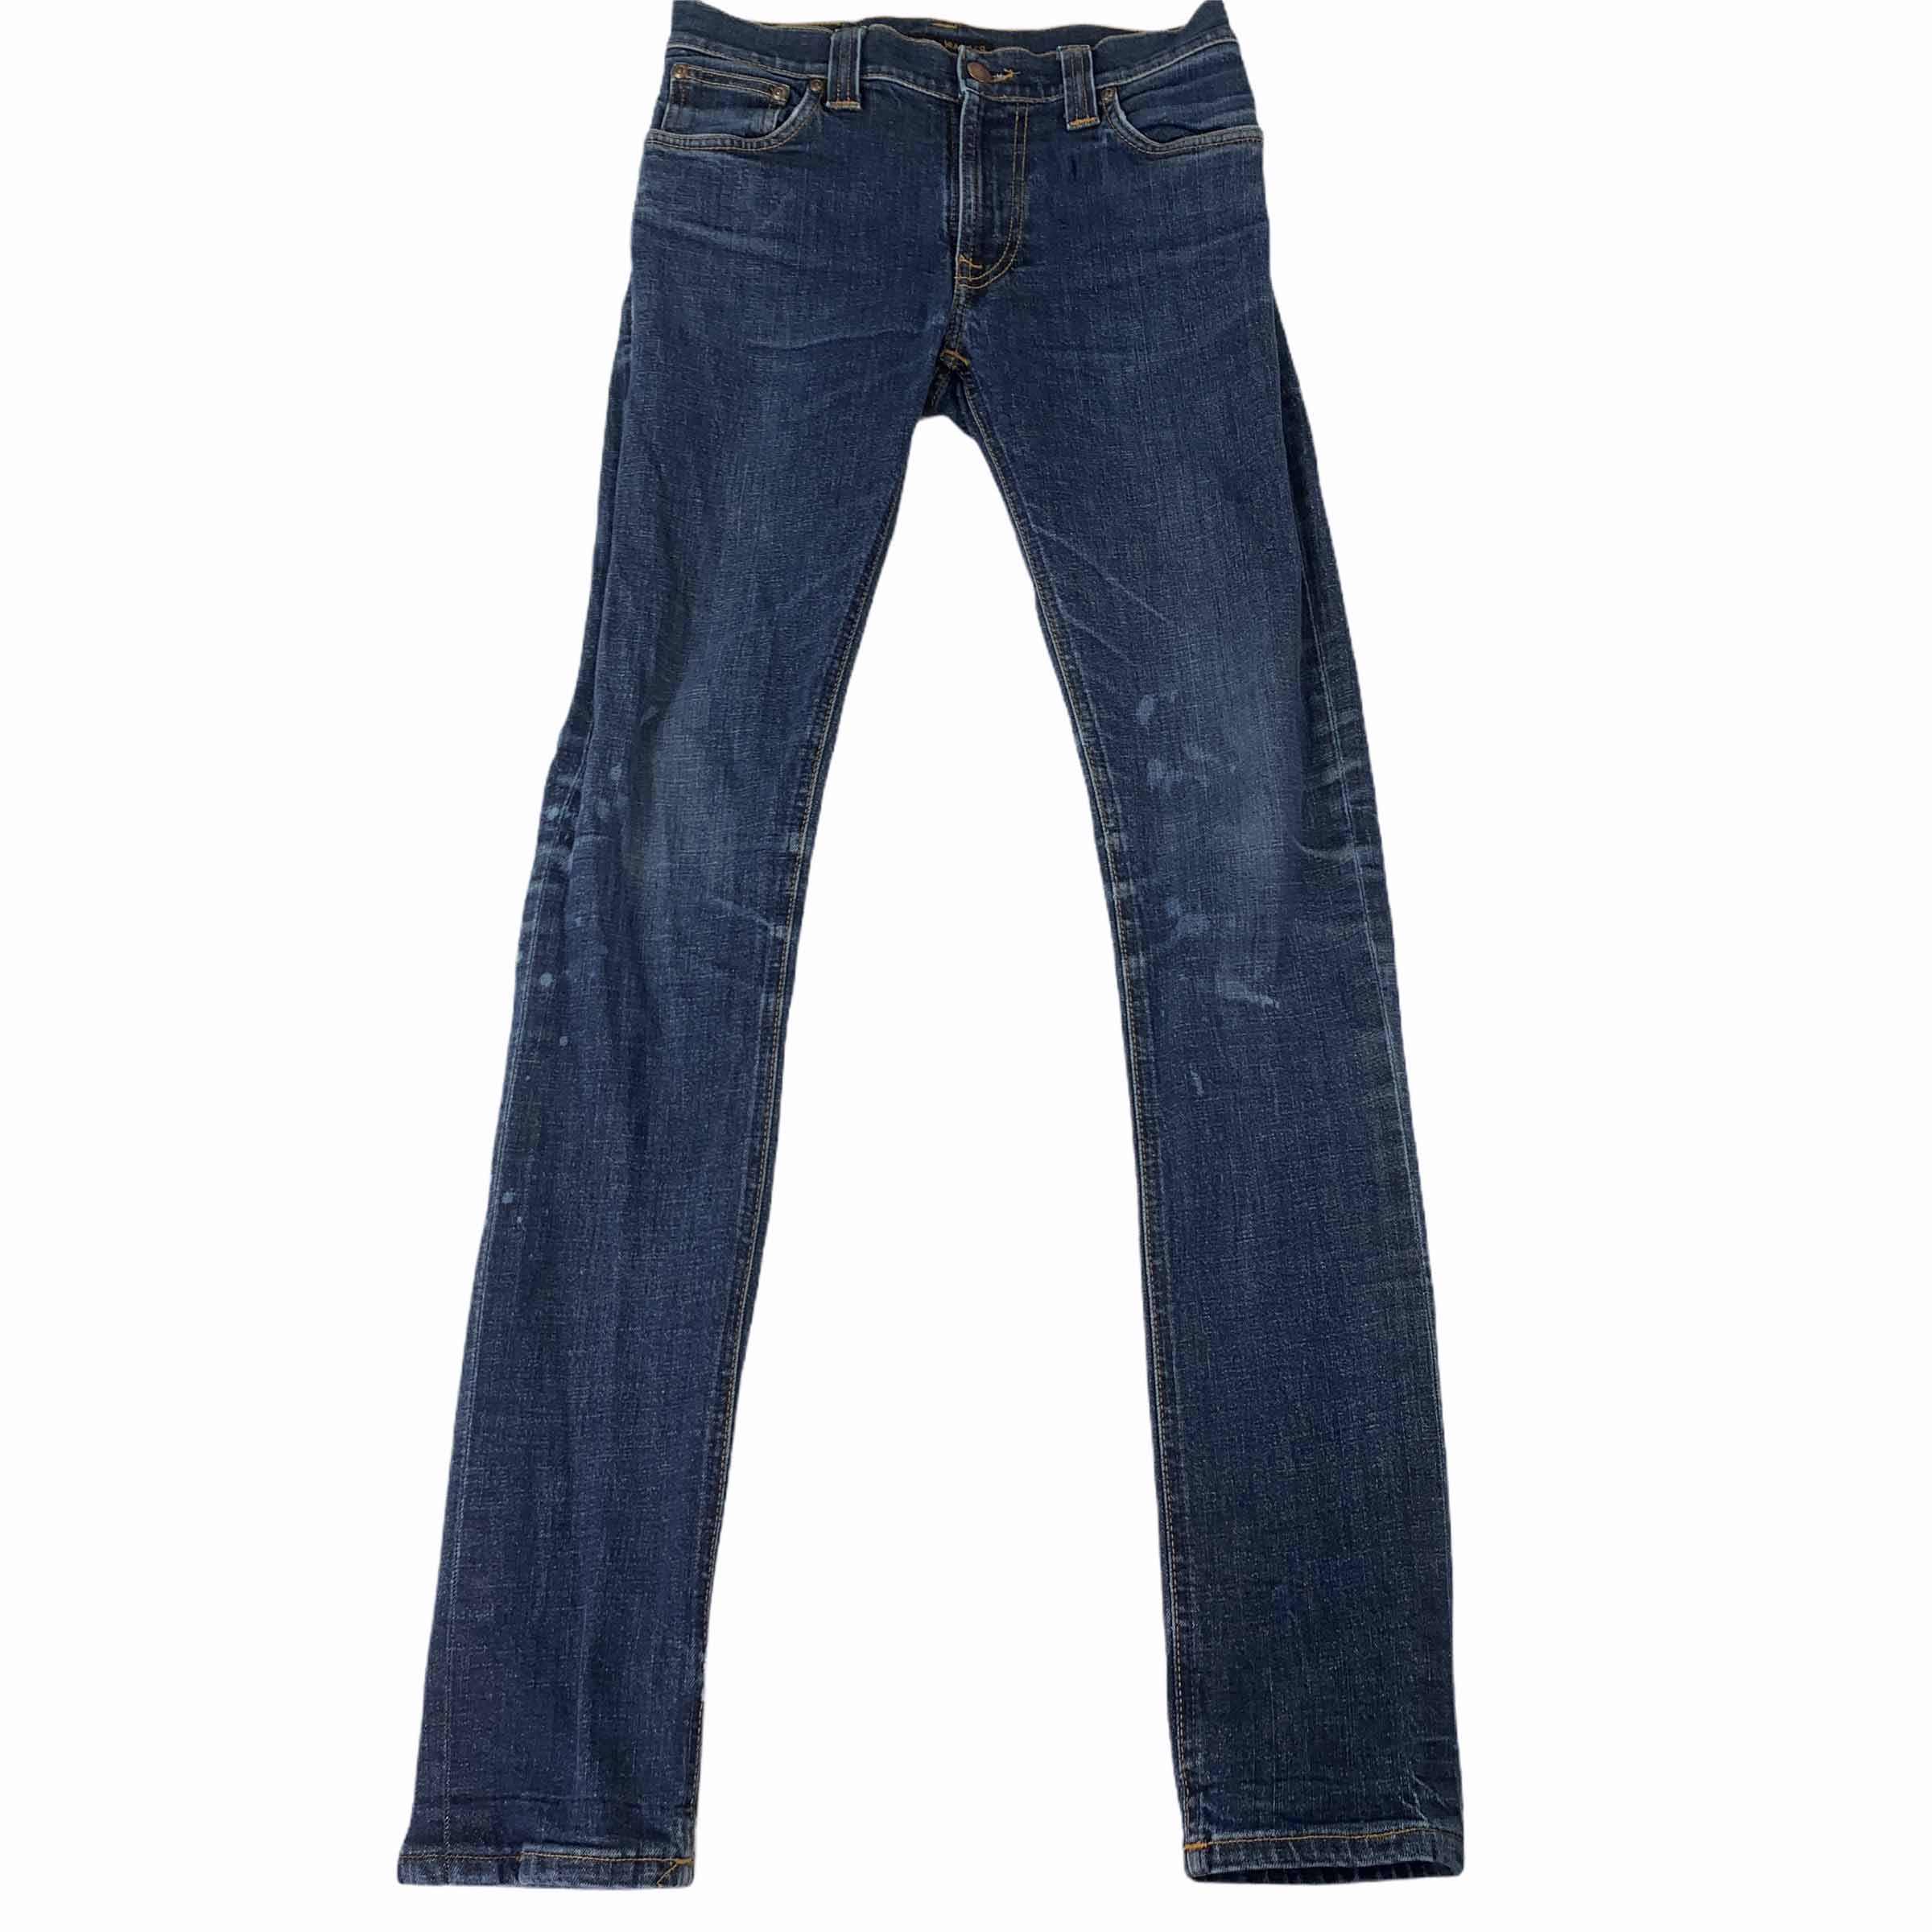 [Nudie Jeans] (Vintage) Mid Washed Denim 30/34 - Size W30 L34